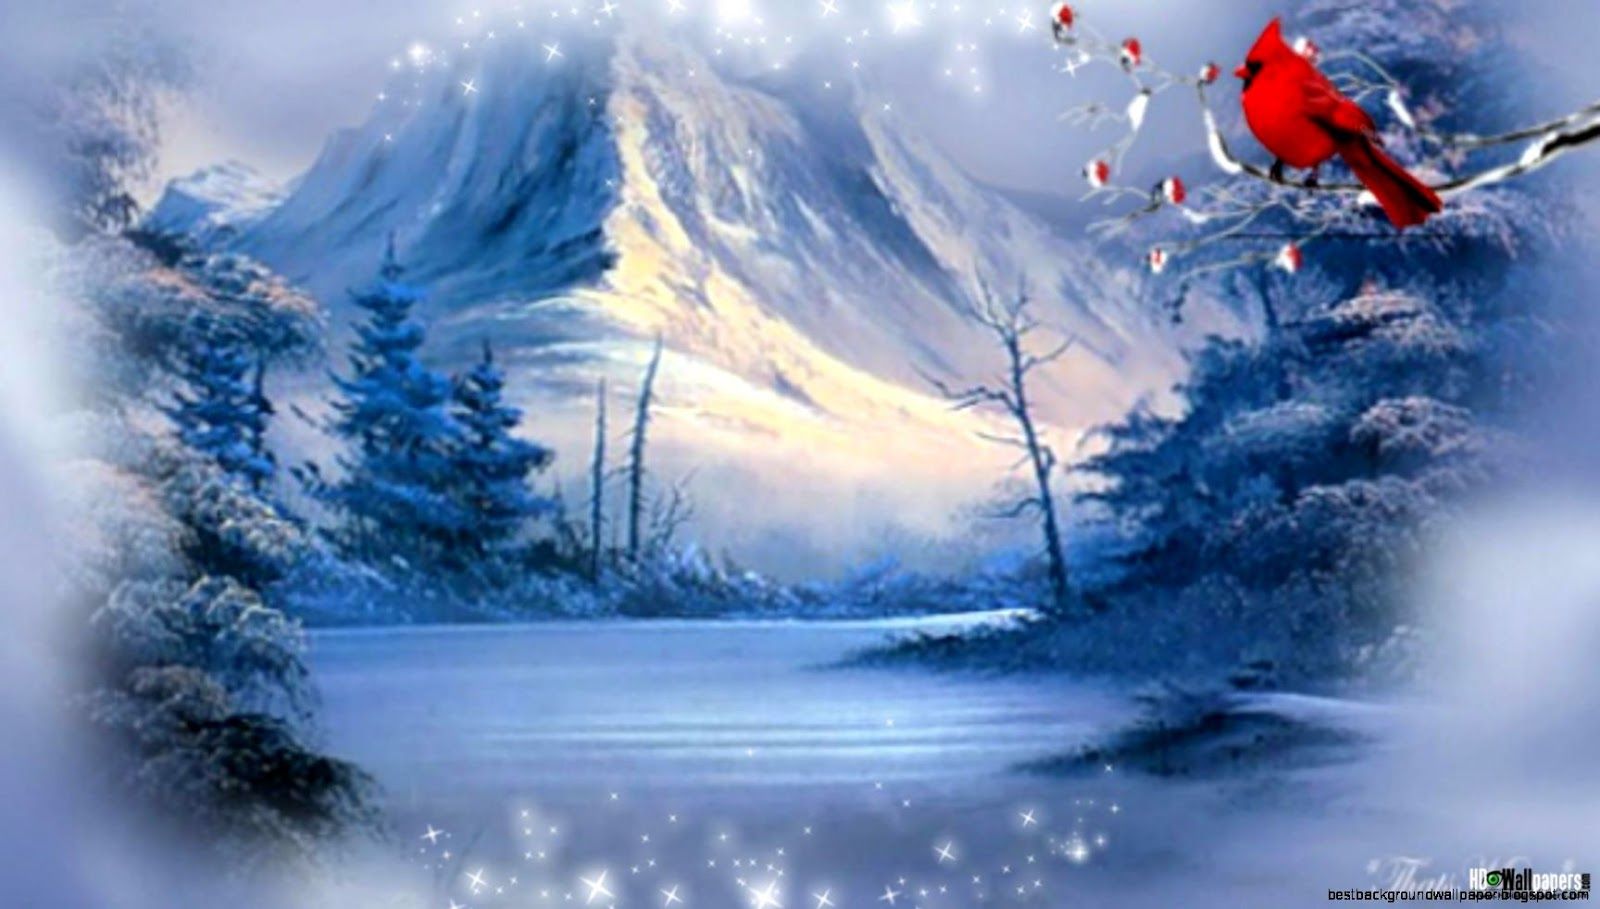 winter scenes for desktop. Winter HD Wallpaper. Best Background Wallpaper. Free winter wallpaper, Winter wallpaper, Winter desktop background